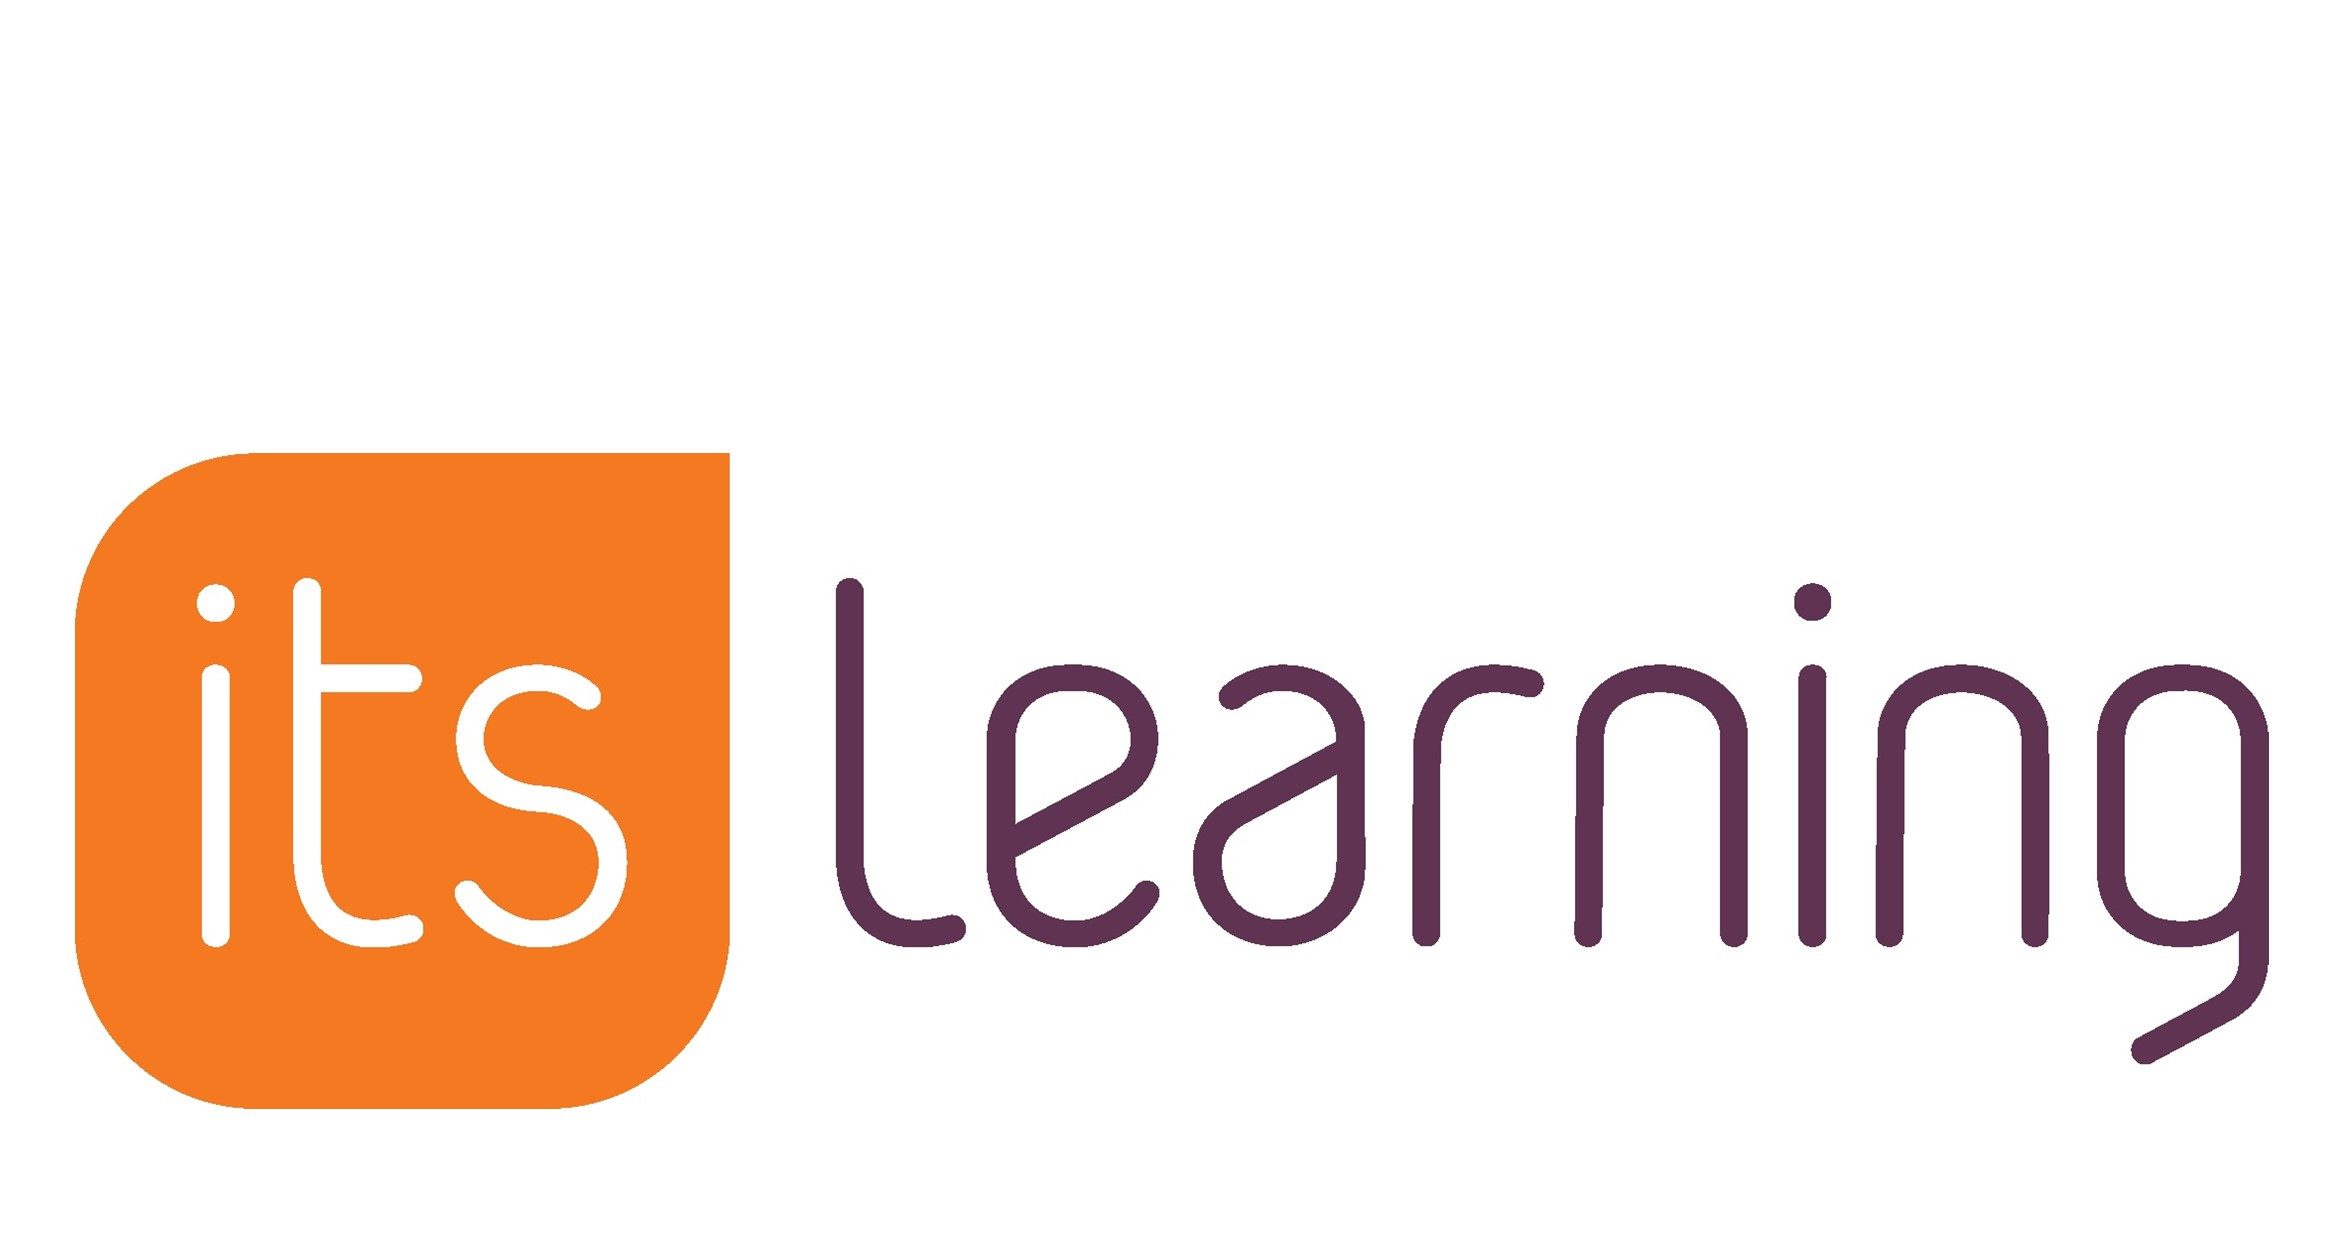 Itslearning - unsere neue Plattform